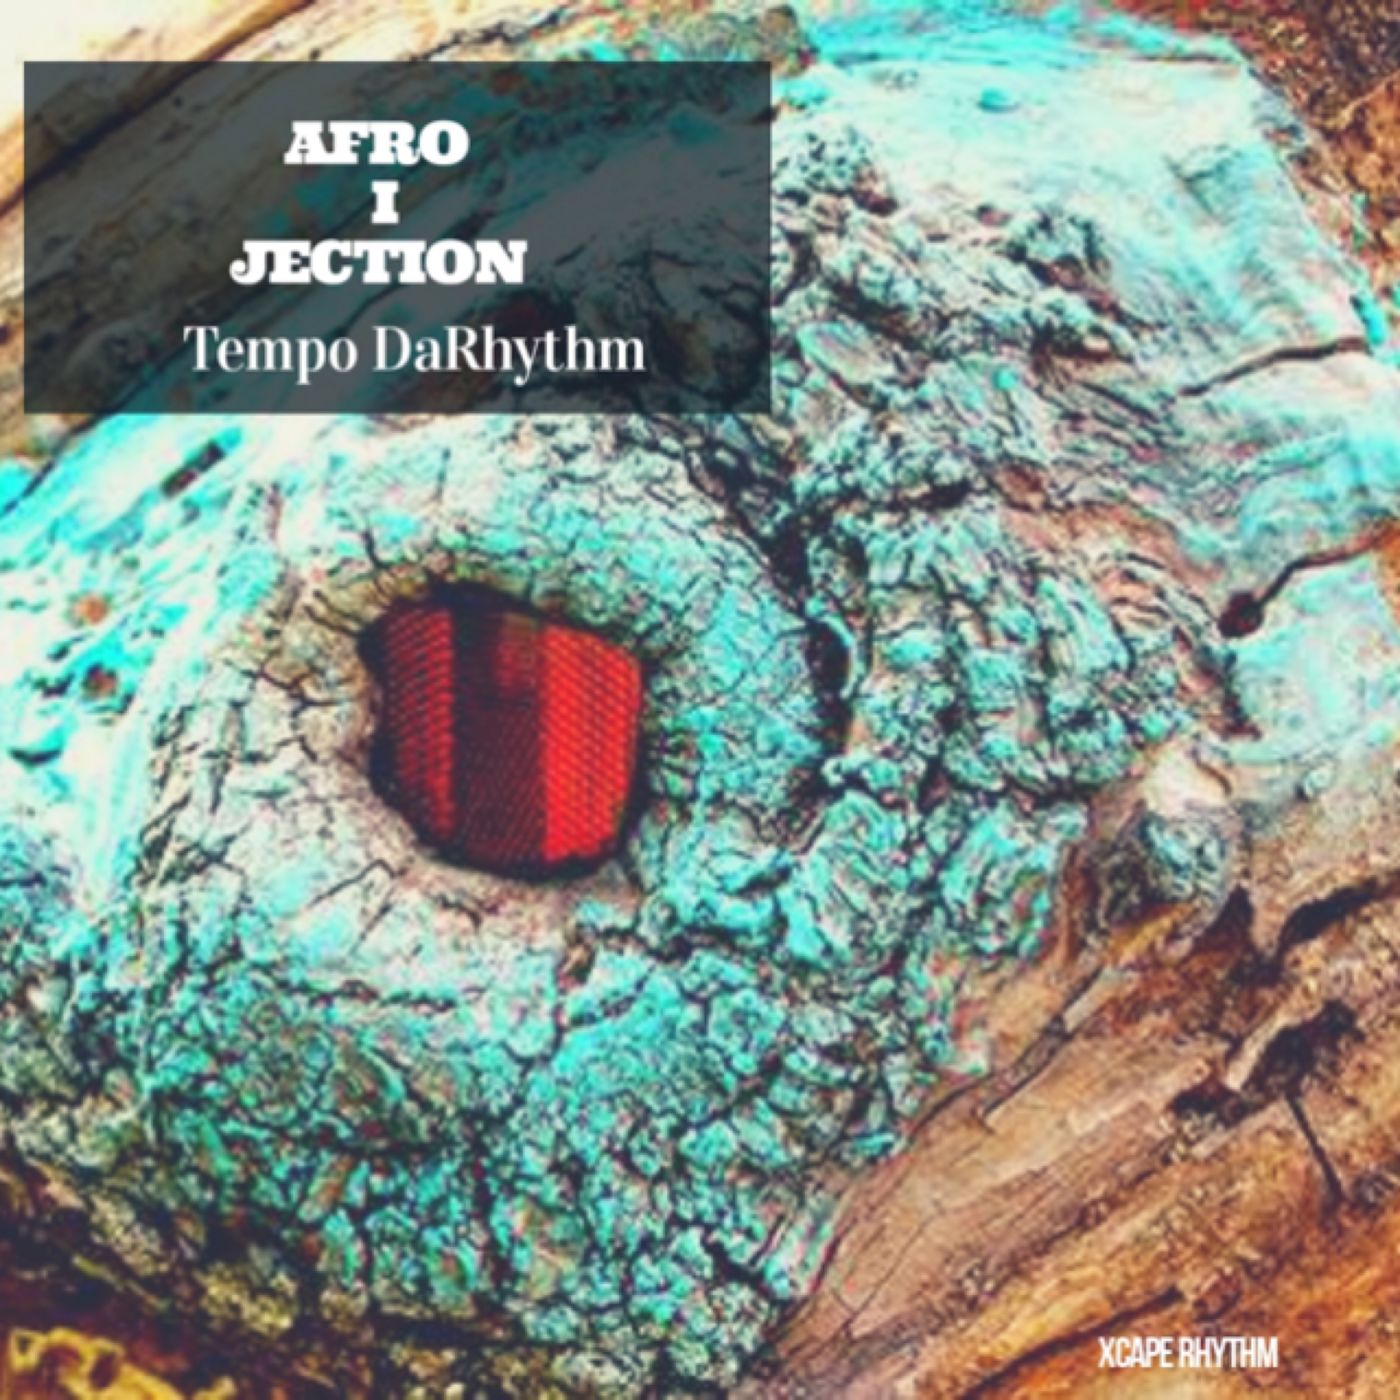 Tempo Darhythm - Afro Injection / Xcape Rhythm Records